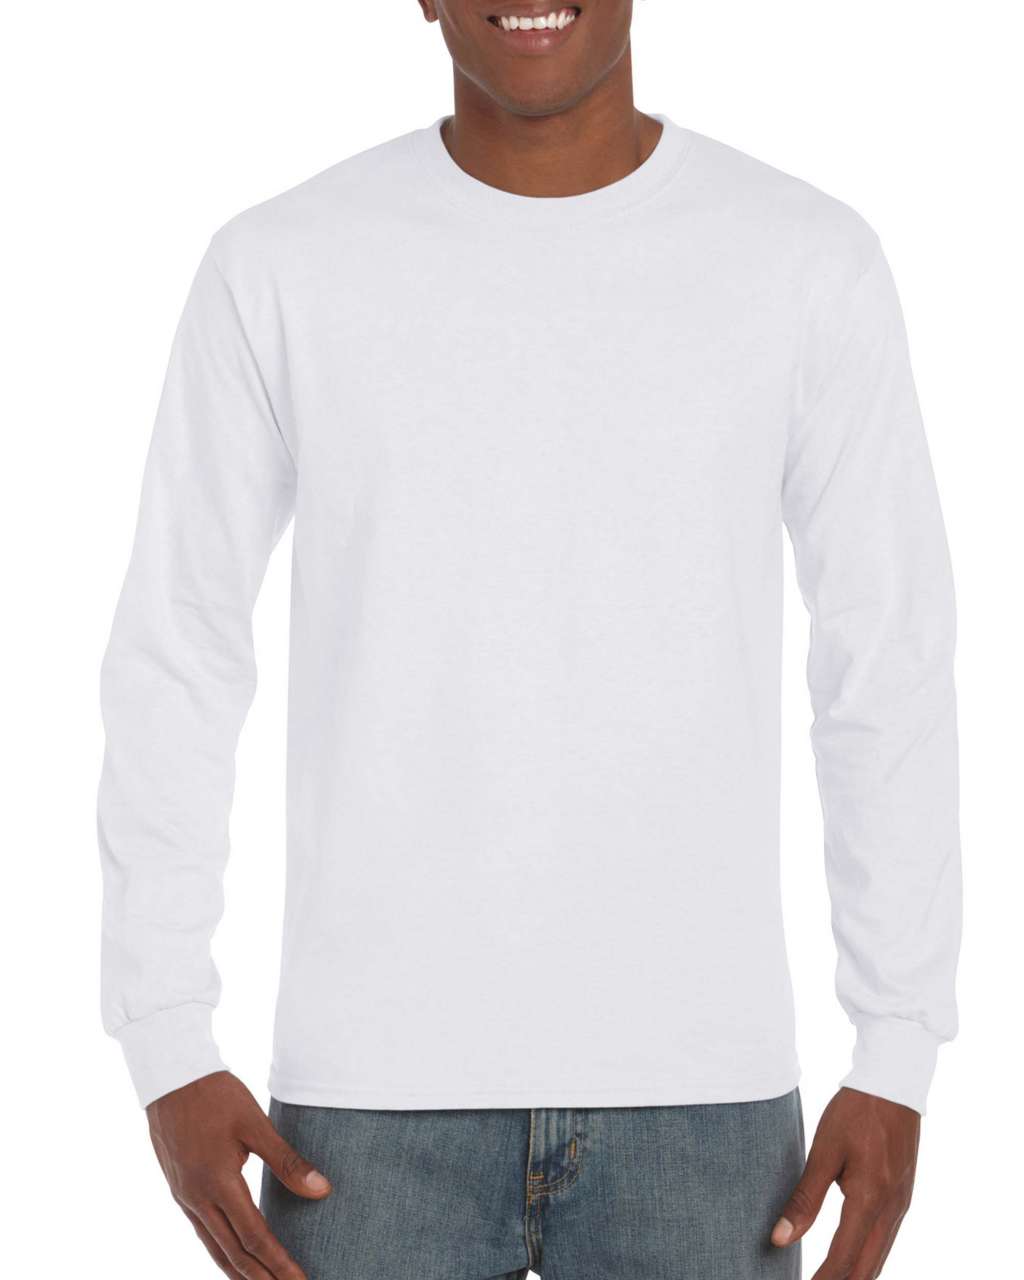 Gildan Hammer Adult Long Sleeve T-shirt - Gildan Hammer Adult Long Sleeve T-shirt - White